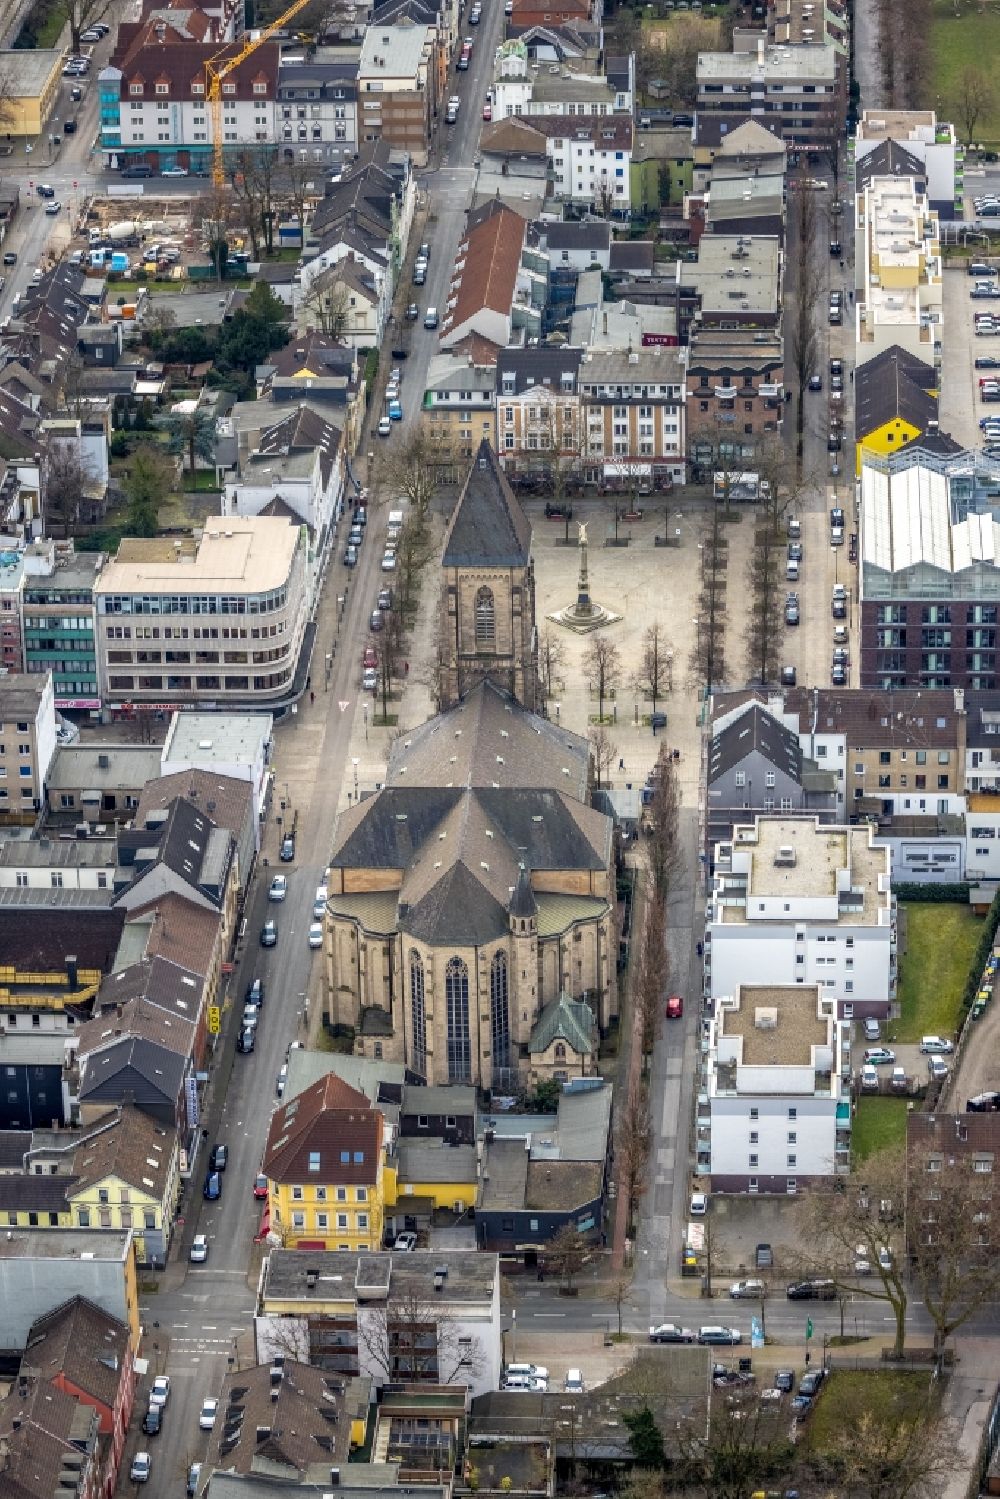 Aerial photograph Oberhausen - Church building Katholische Kirche on Altmarkt and Jobcenter Oberhausen on Marktstrasse in Oberhausen in the state North Rhine-Westphalia, Germany